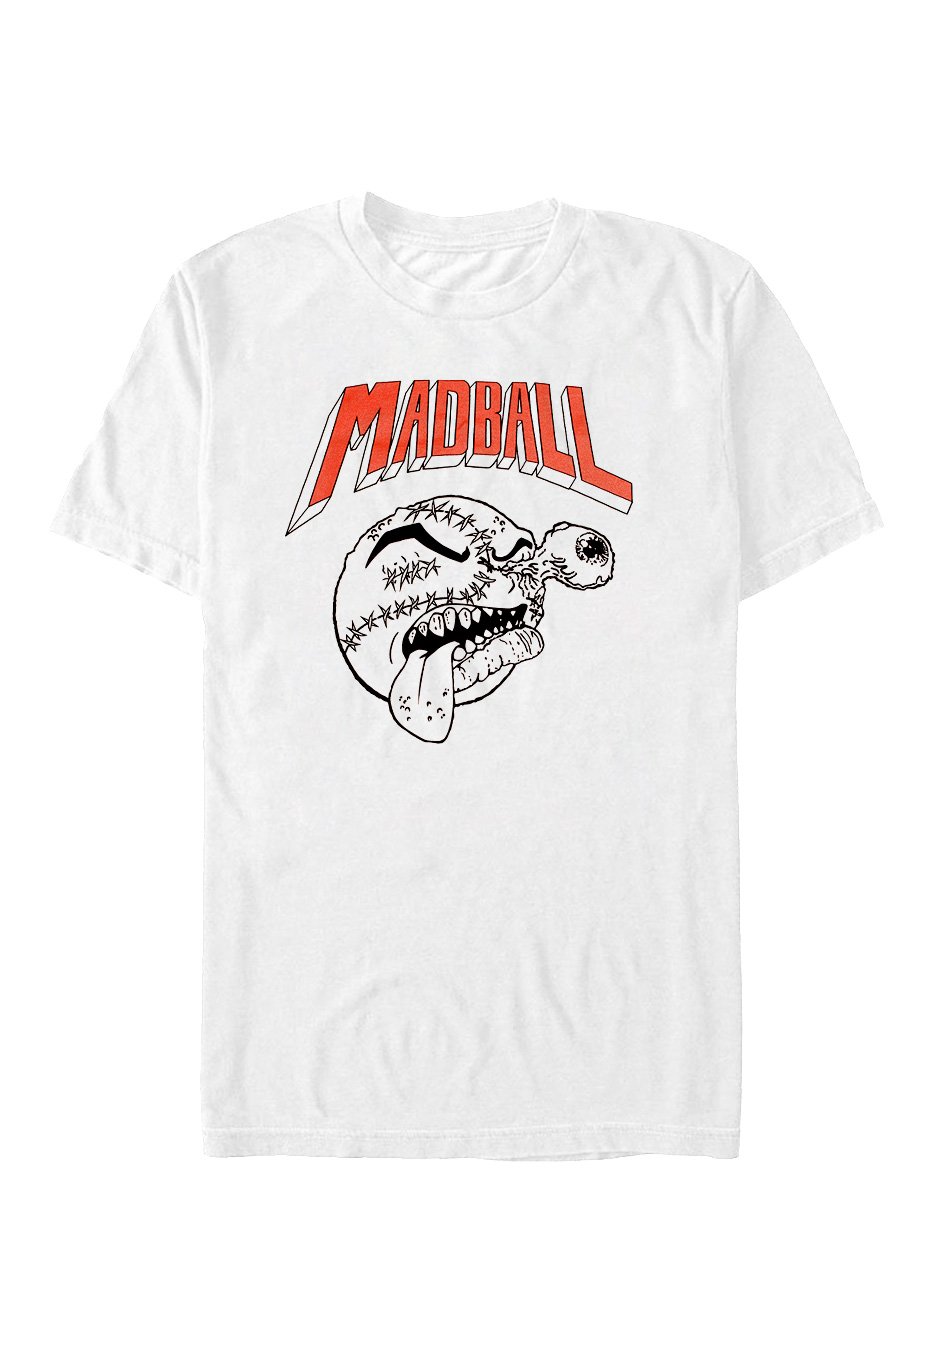 Madball - Retro Set If Off White - T-Shirt